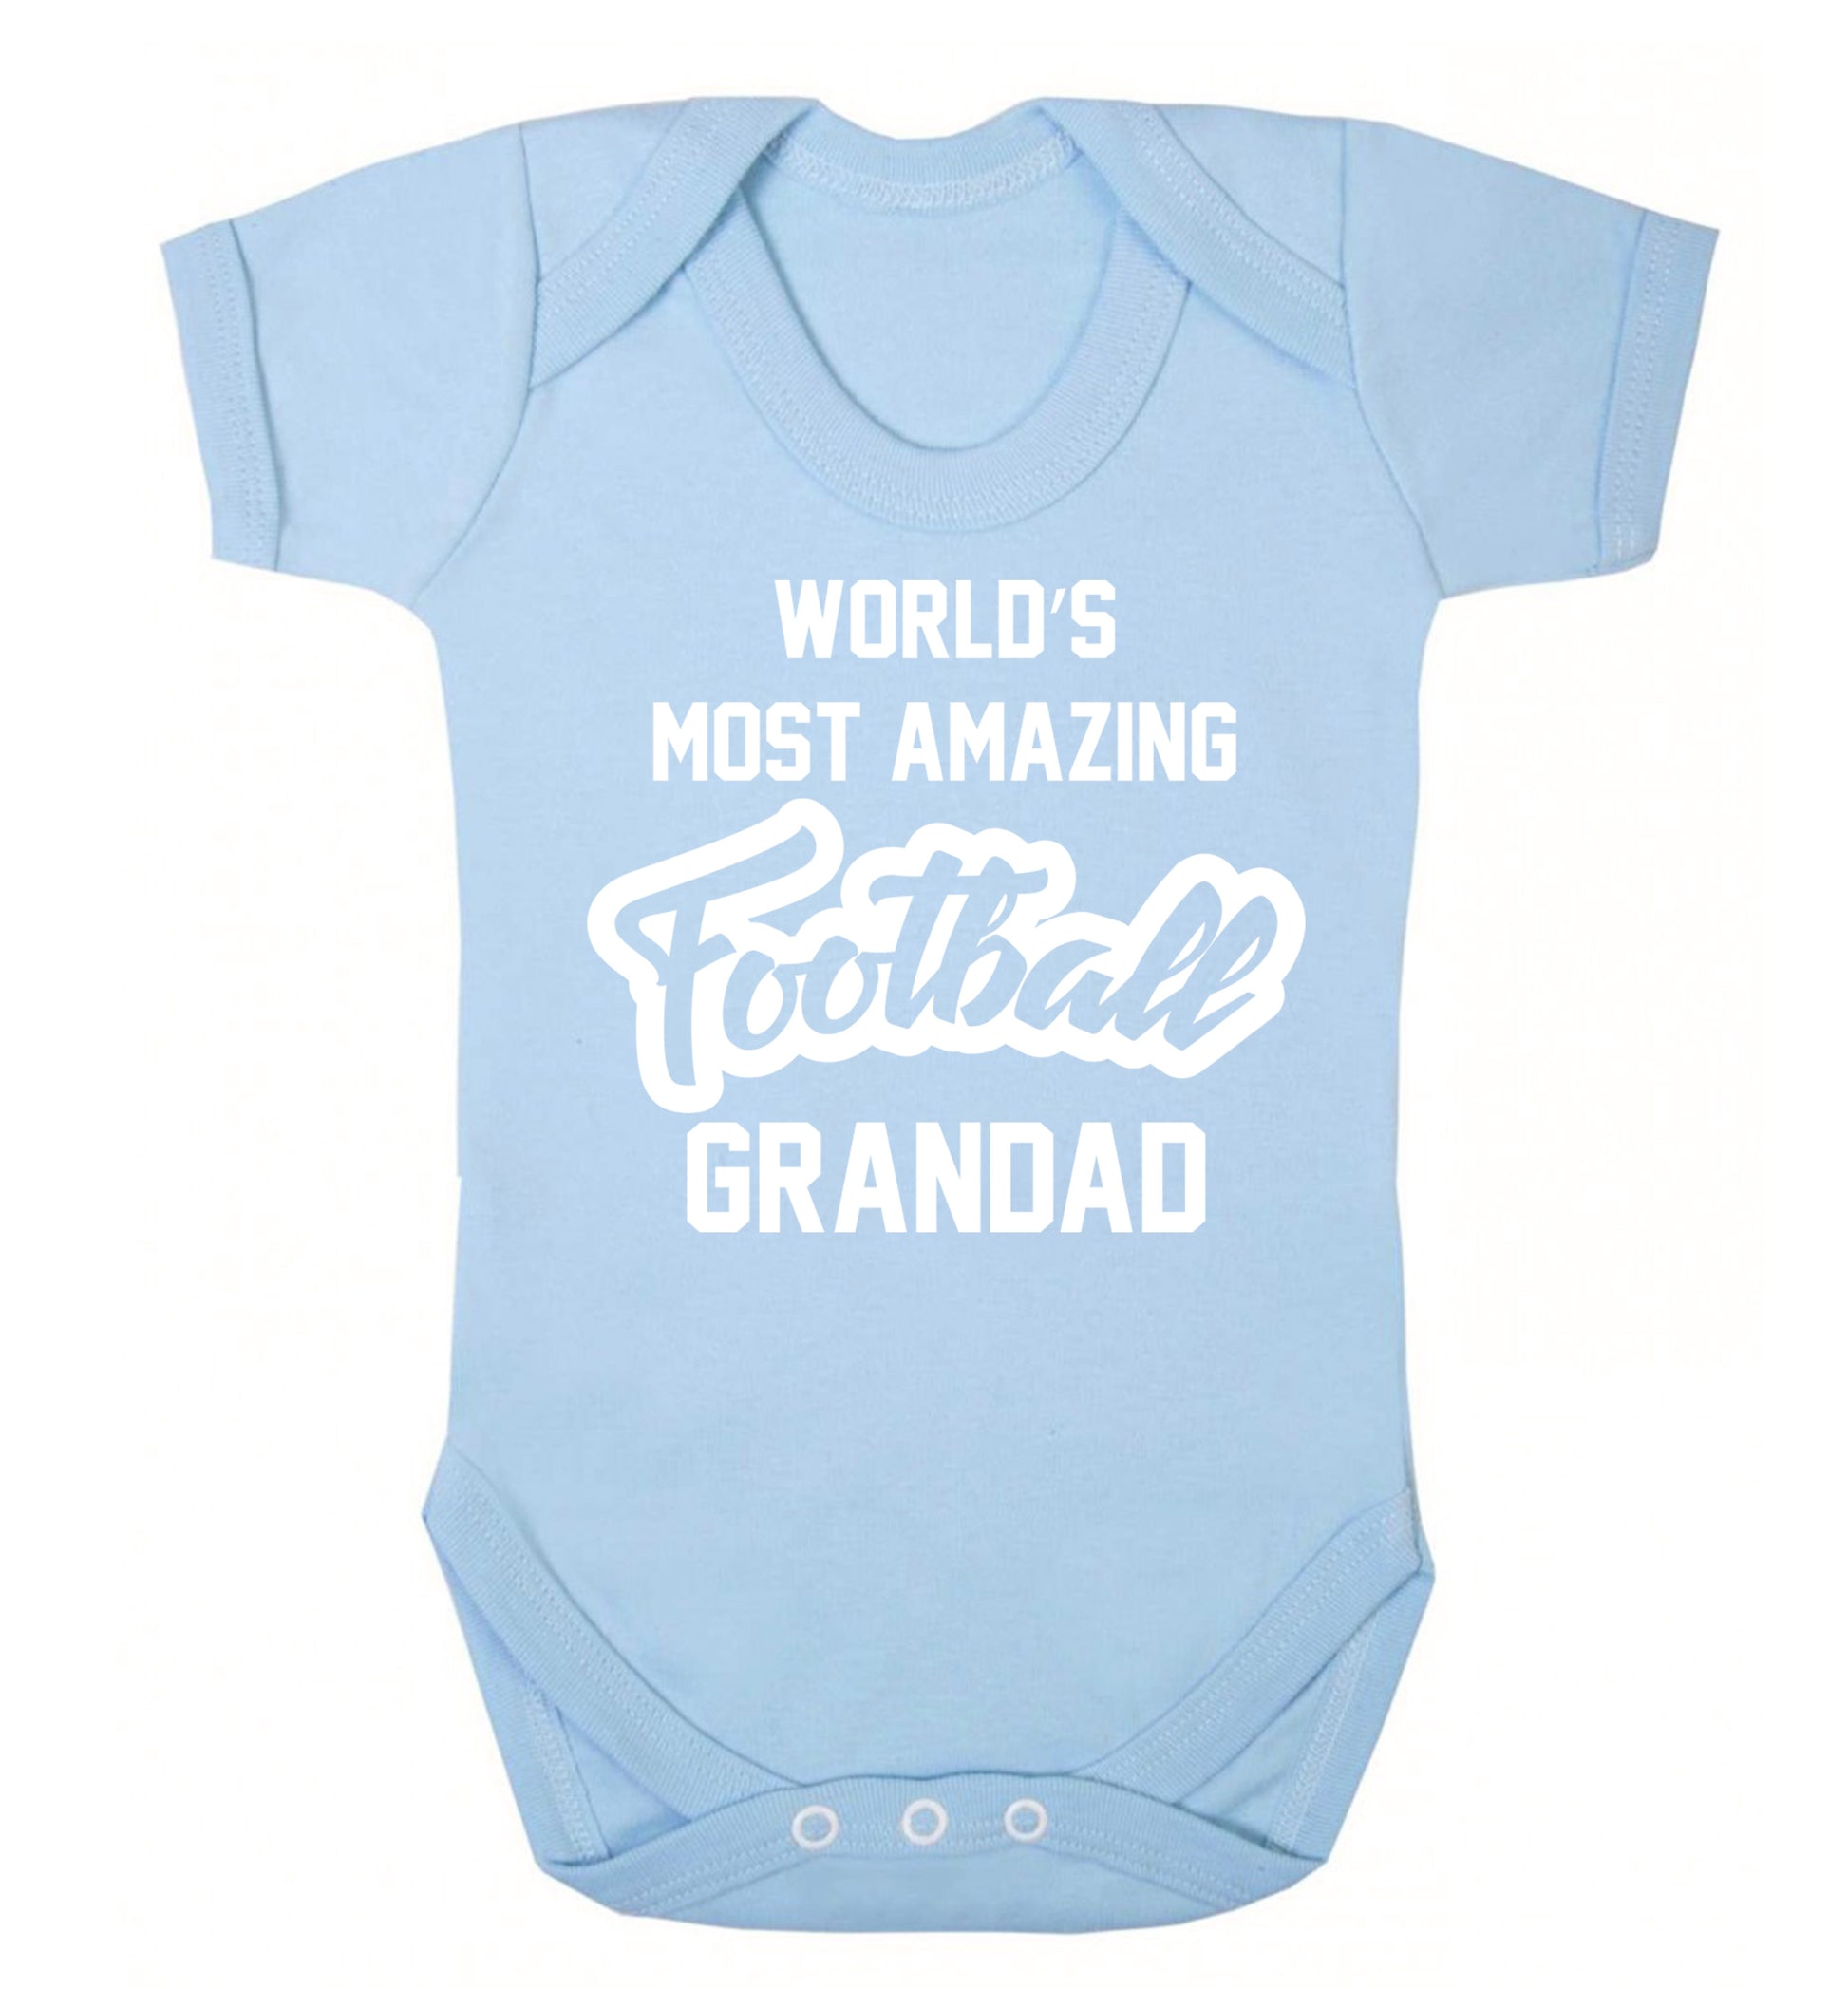 Worlds most amazing football grandad Baby Vest pale blue 18-24 months